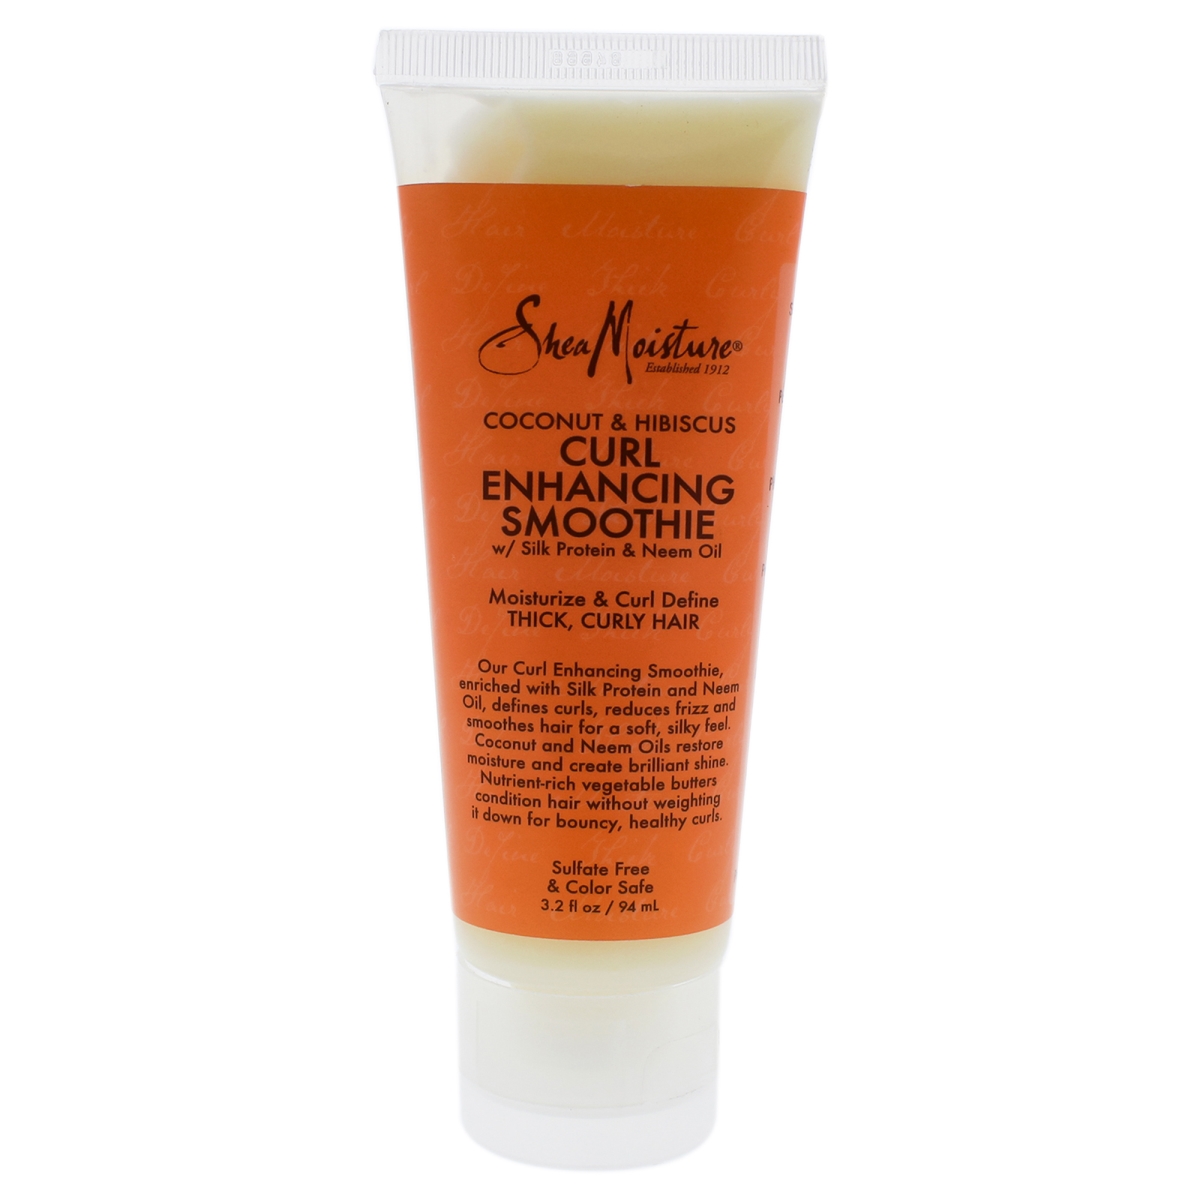 I0080326 Coconut & Hibiscus Curl Enhancing Smoothie Cream For Women - 3.2 Oz